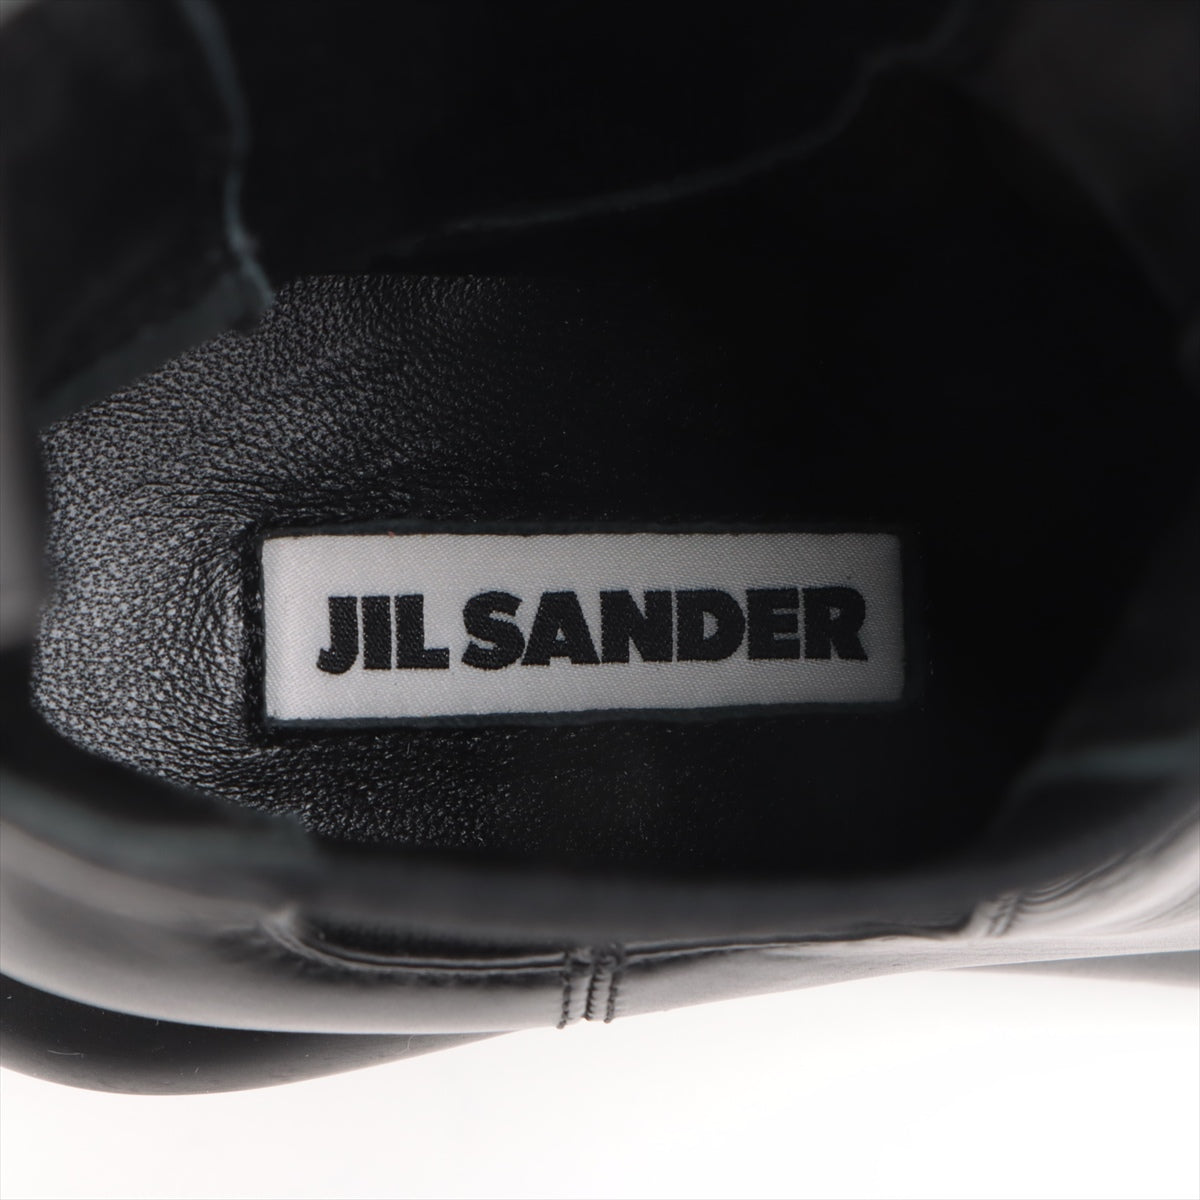 Gilsander Leather Side Goar Shoes 36  Black J15WU0022 Blockhead